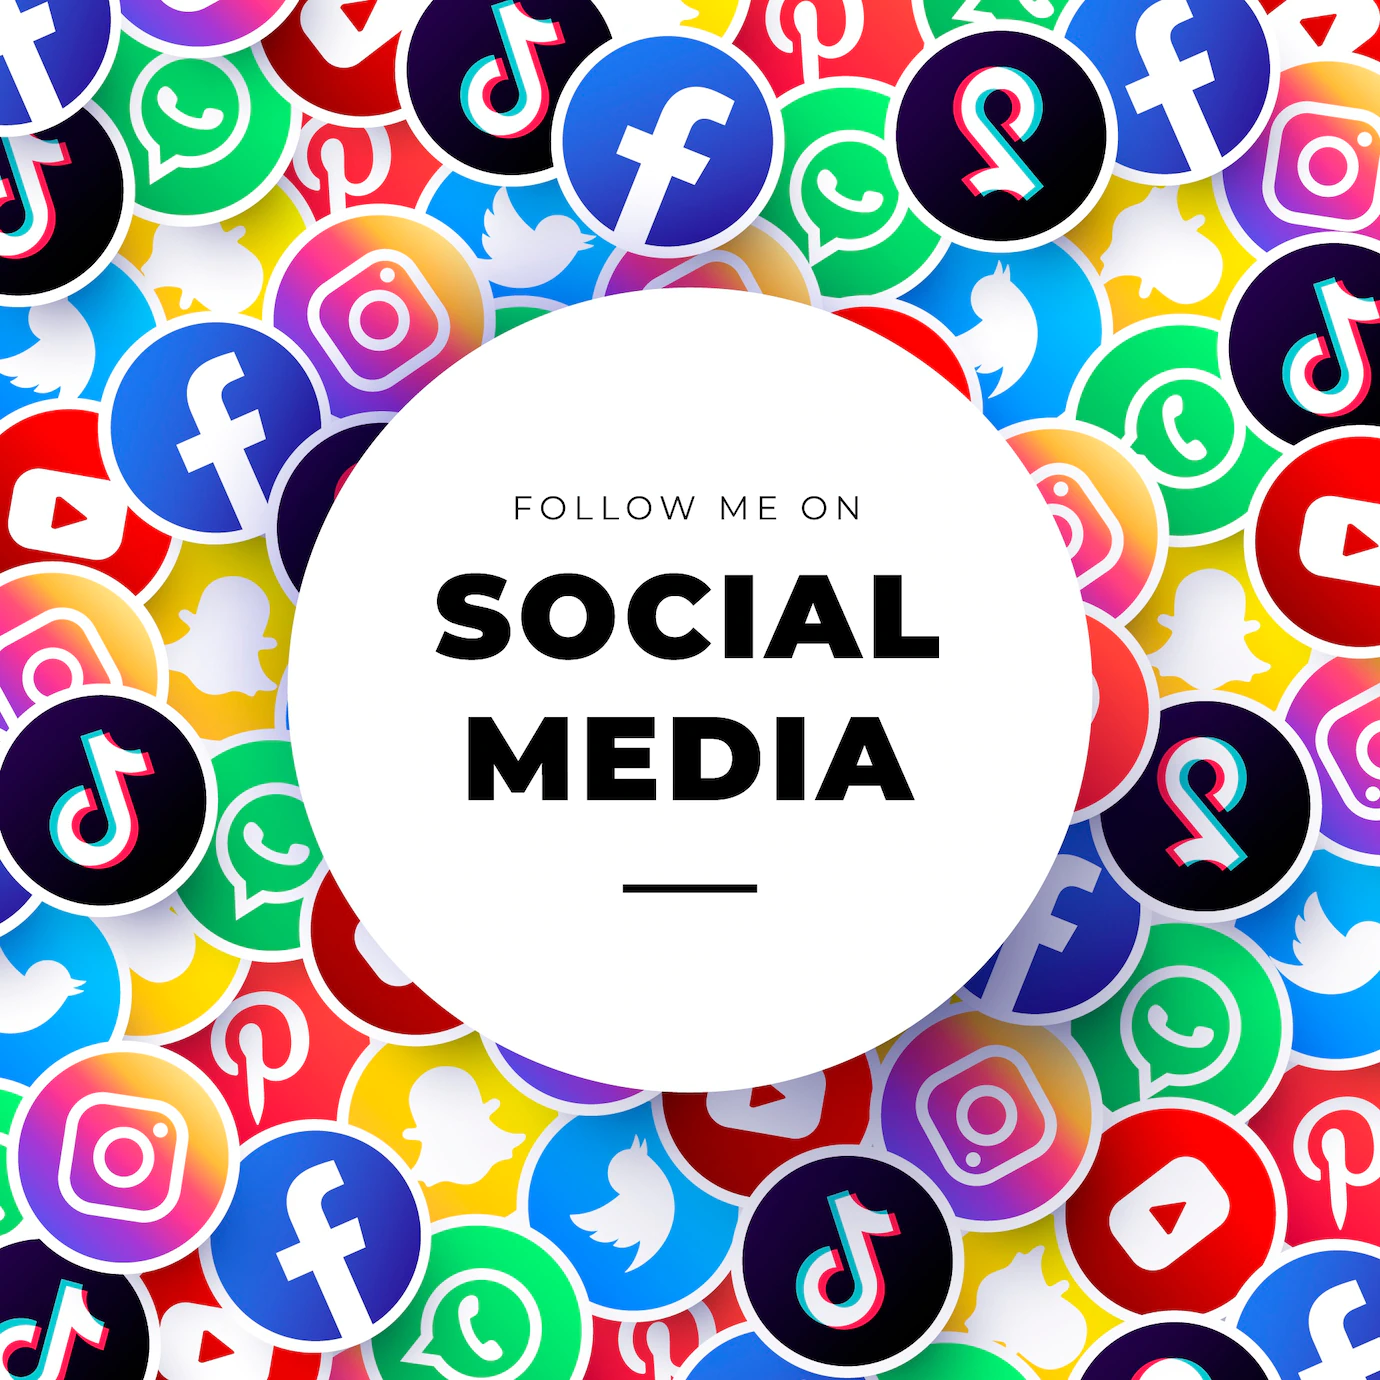 Social Media Logos Background Template 69286 205